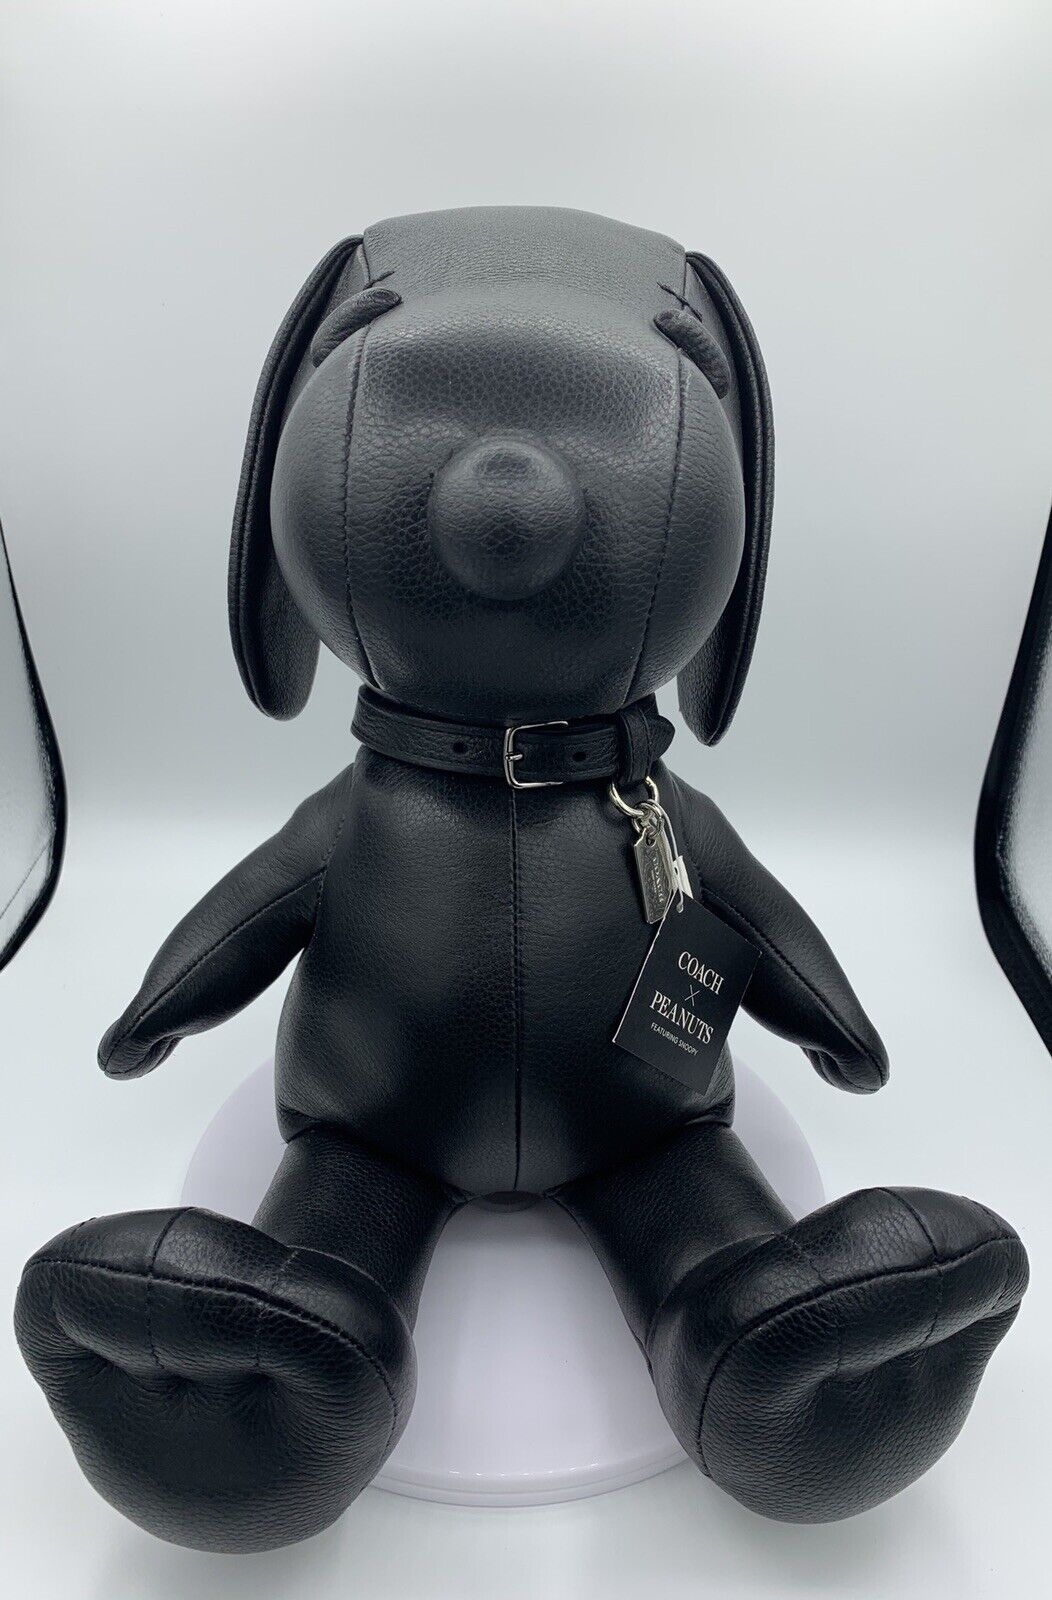 Coach X Black Leather Snoopy Doll Peanuts Medium Limited Ed RARE BLACK FRIDAY